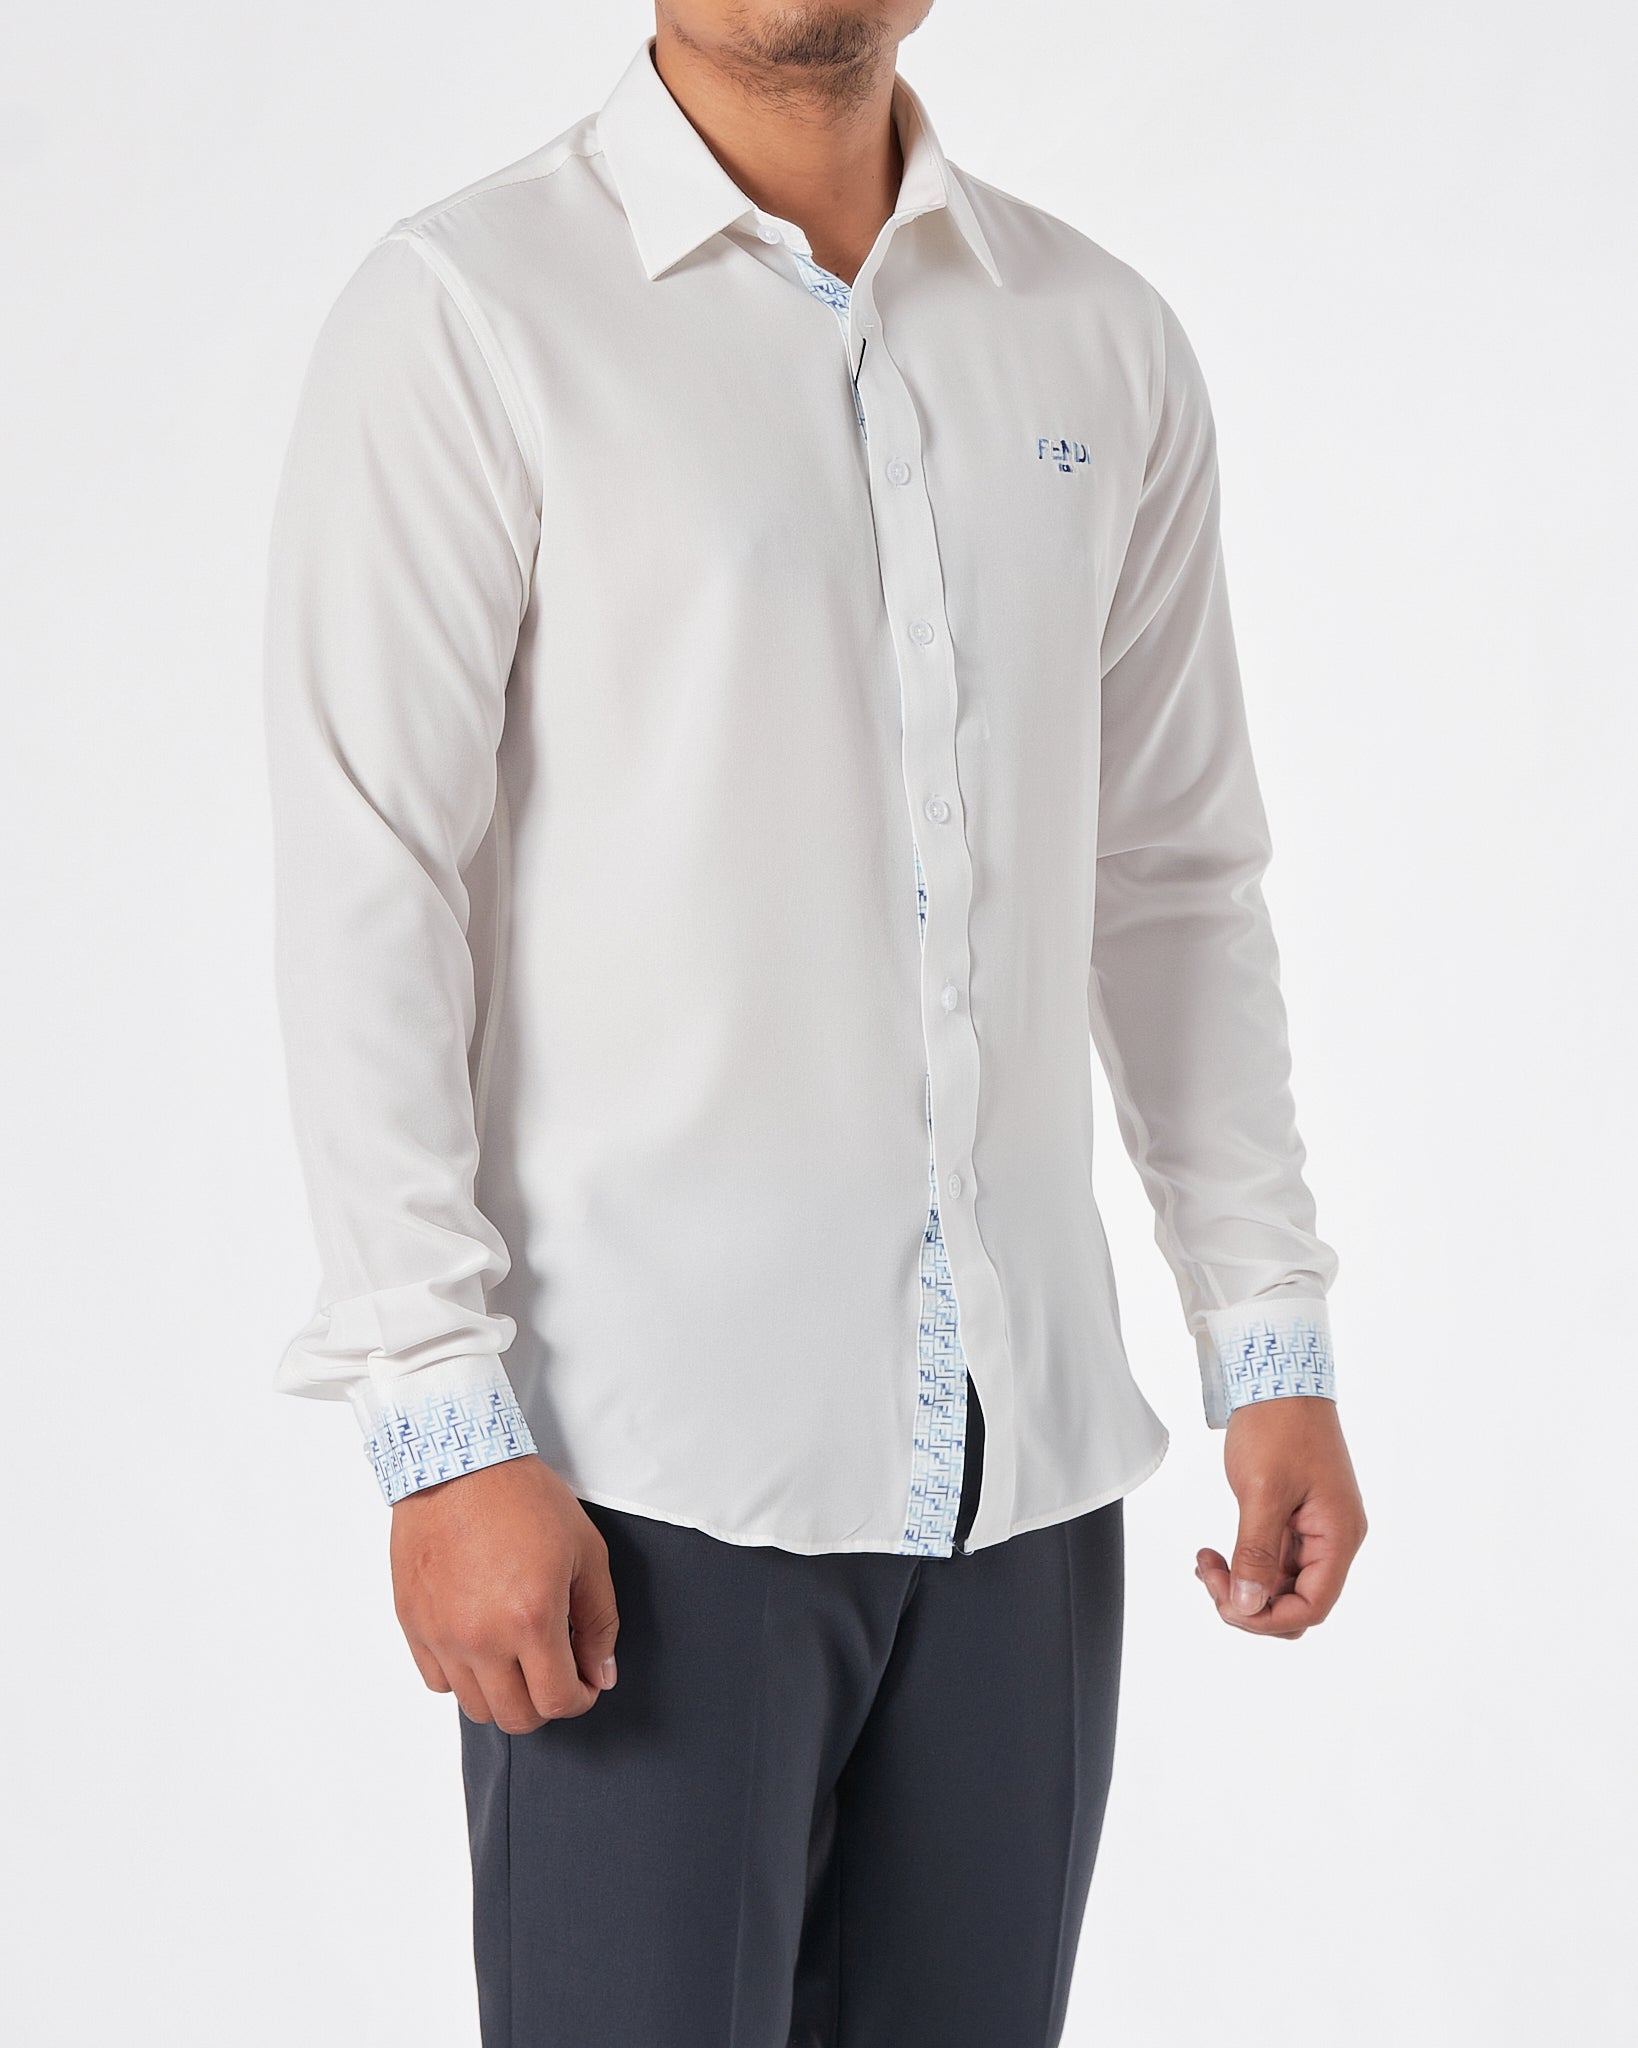 FEN Logo Embroidered Men Light Blue Shirts Long Sleeve 27.90